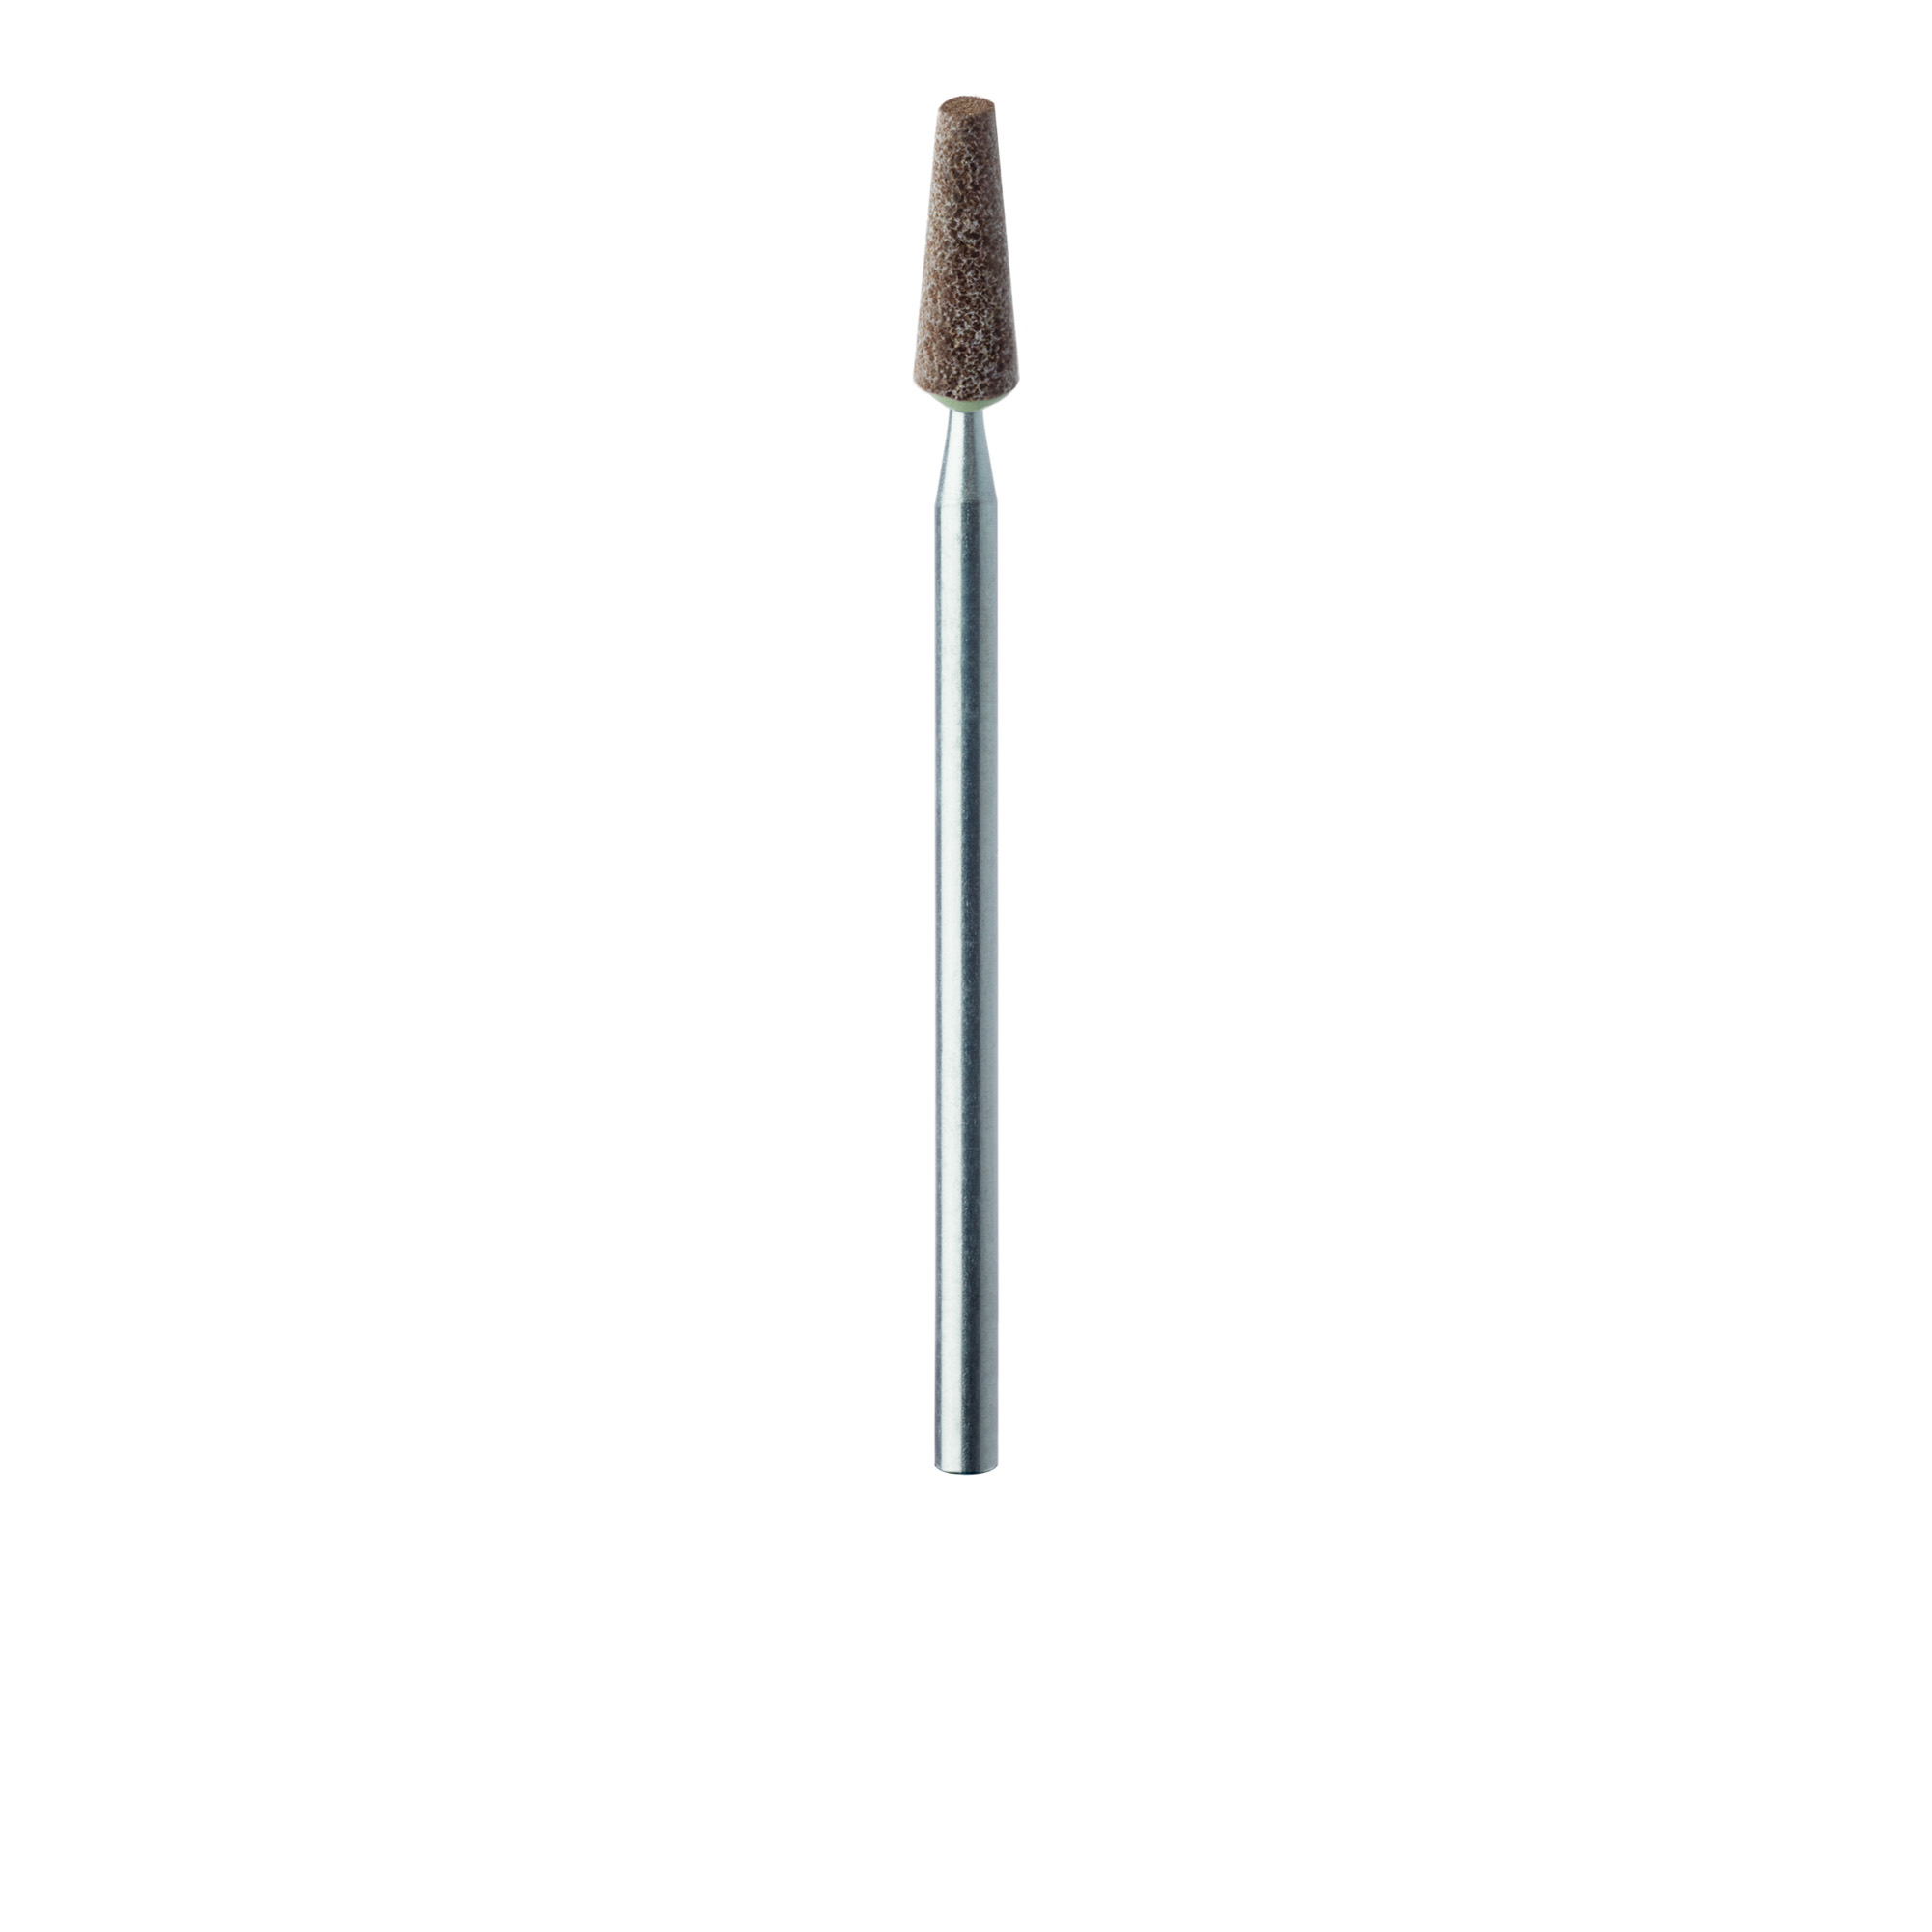 733-035-HP-BRN Abrasive, Brown, Tapered Flat End, 3.5mm Ø, Hard Bonding, Medium, HP